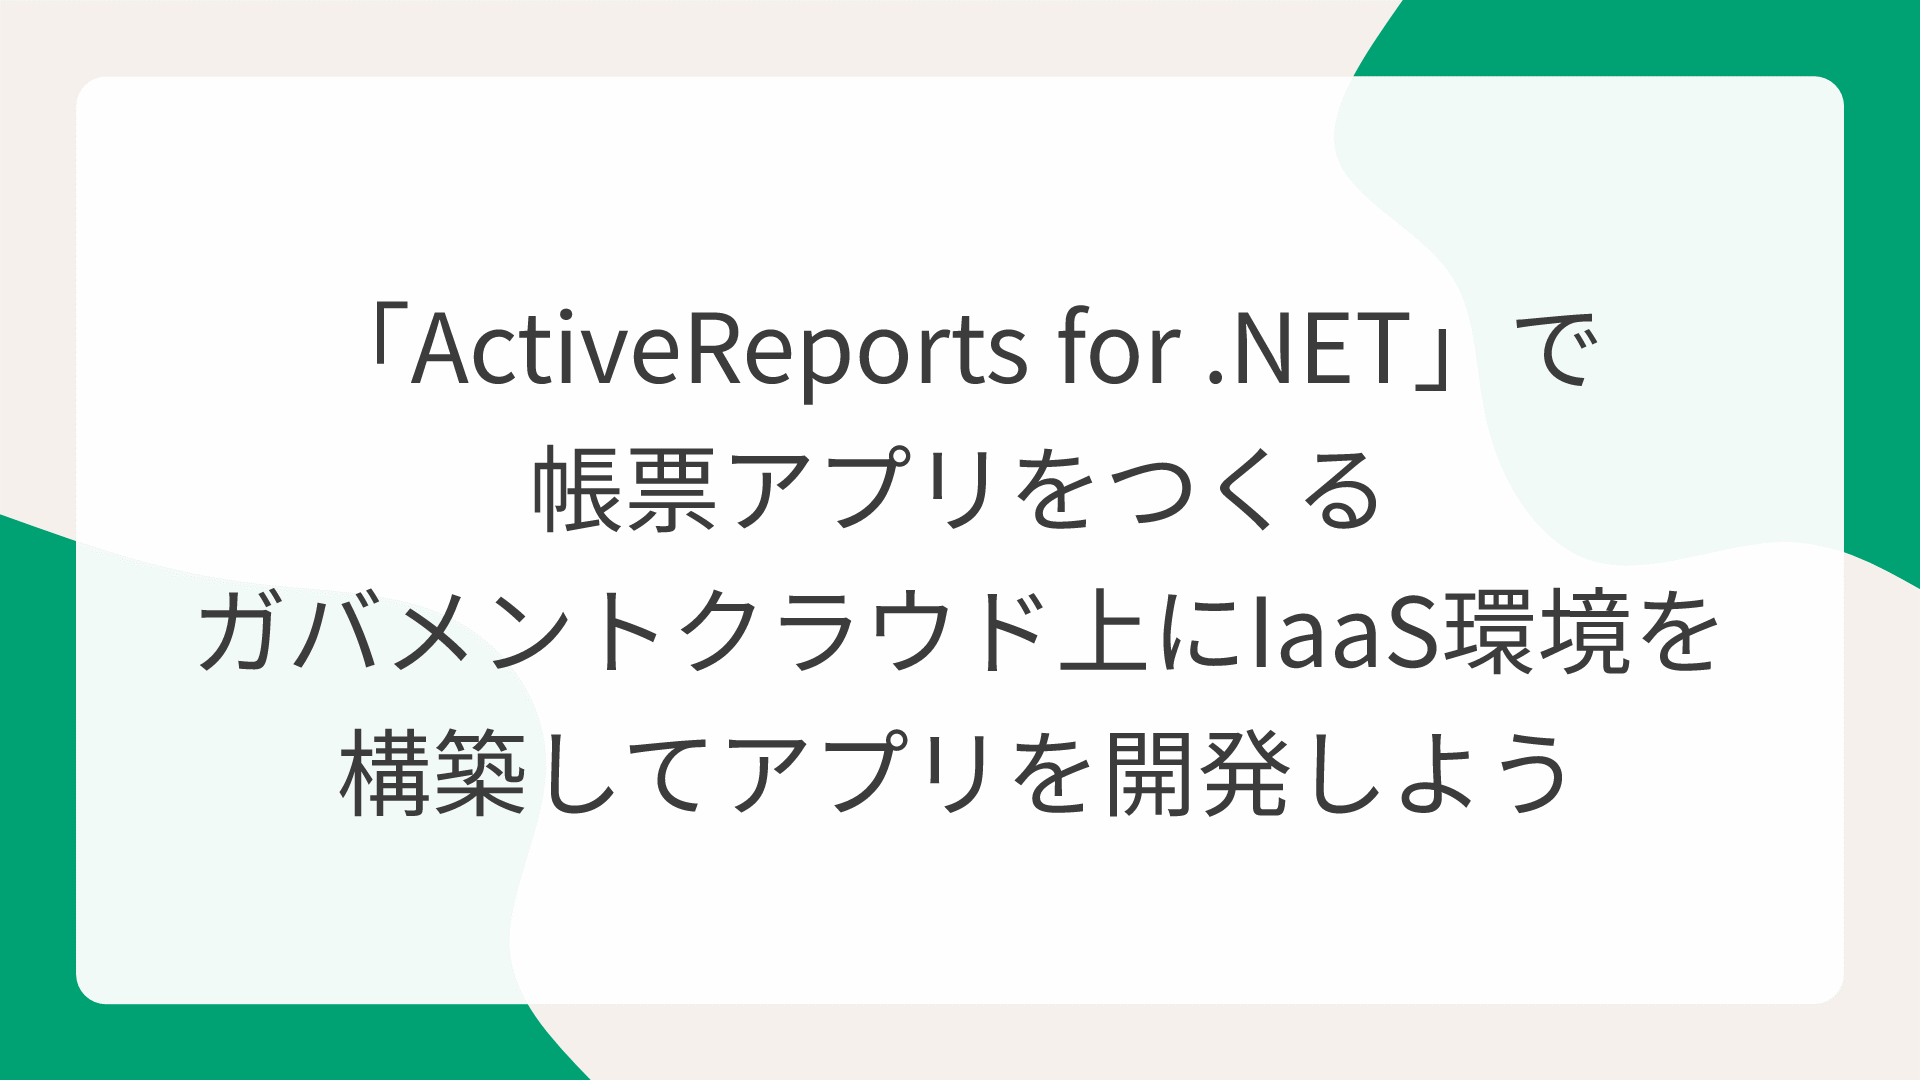 「ActiveReports for .NET」で帳票アプリをつくるガバメントクラウド上にIaaS環境を構築してアプリを開発しよう